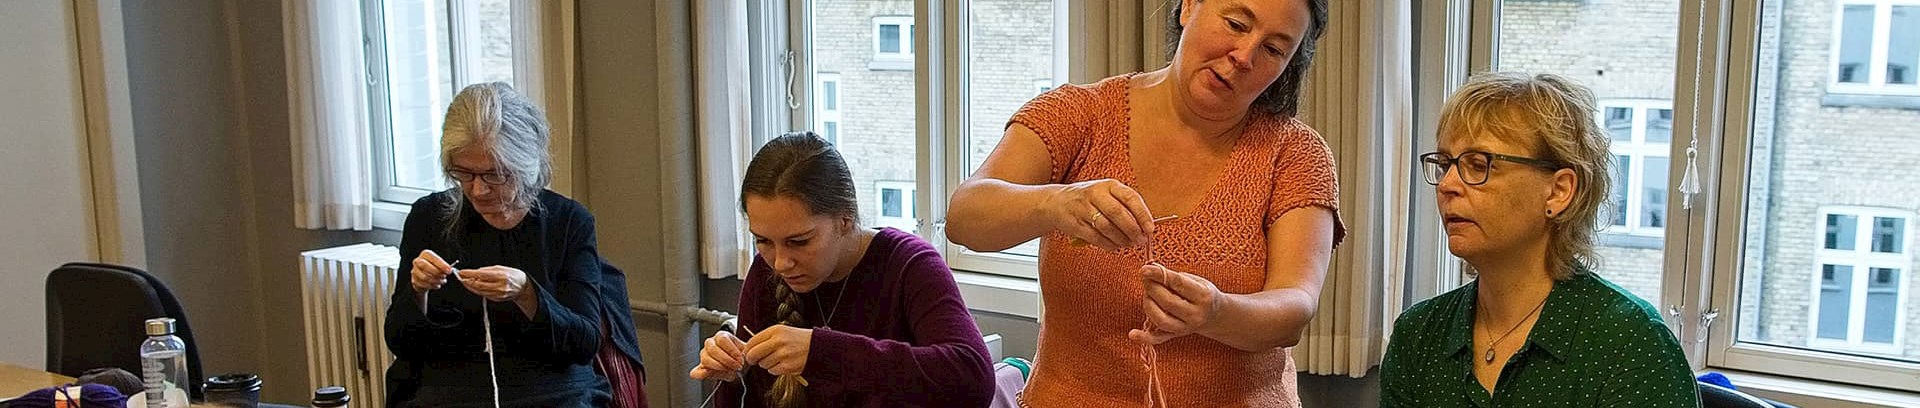 Hækle-kursus ved FOF Aarhus, underviser Lotte Mouritsen